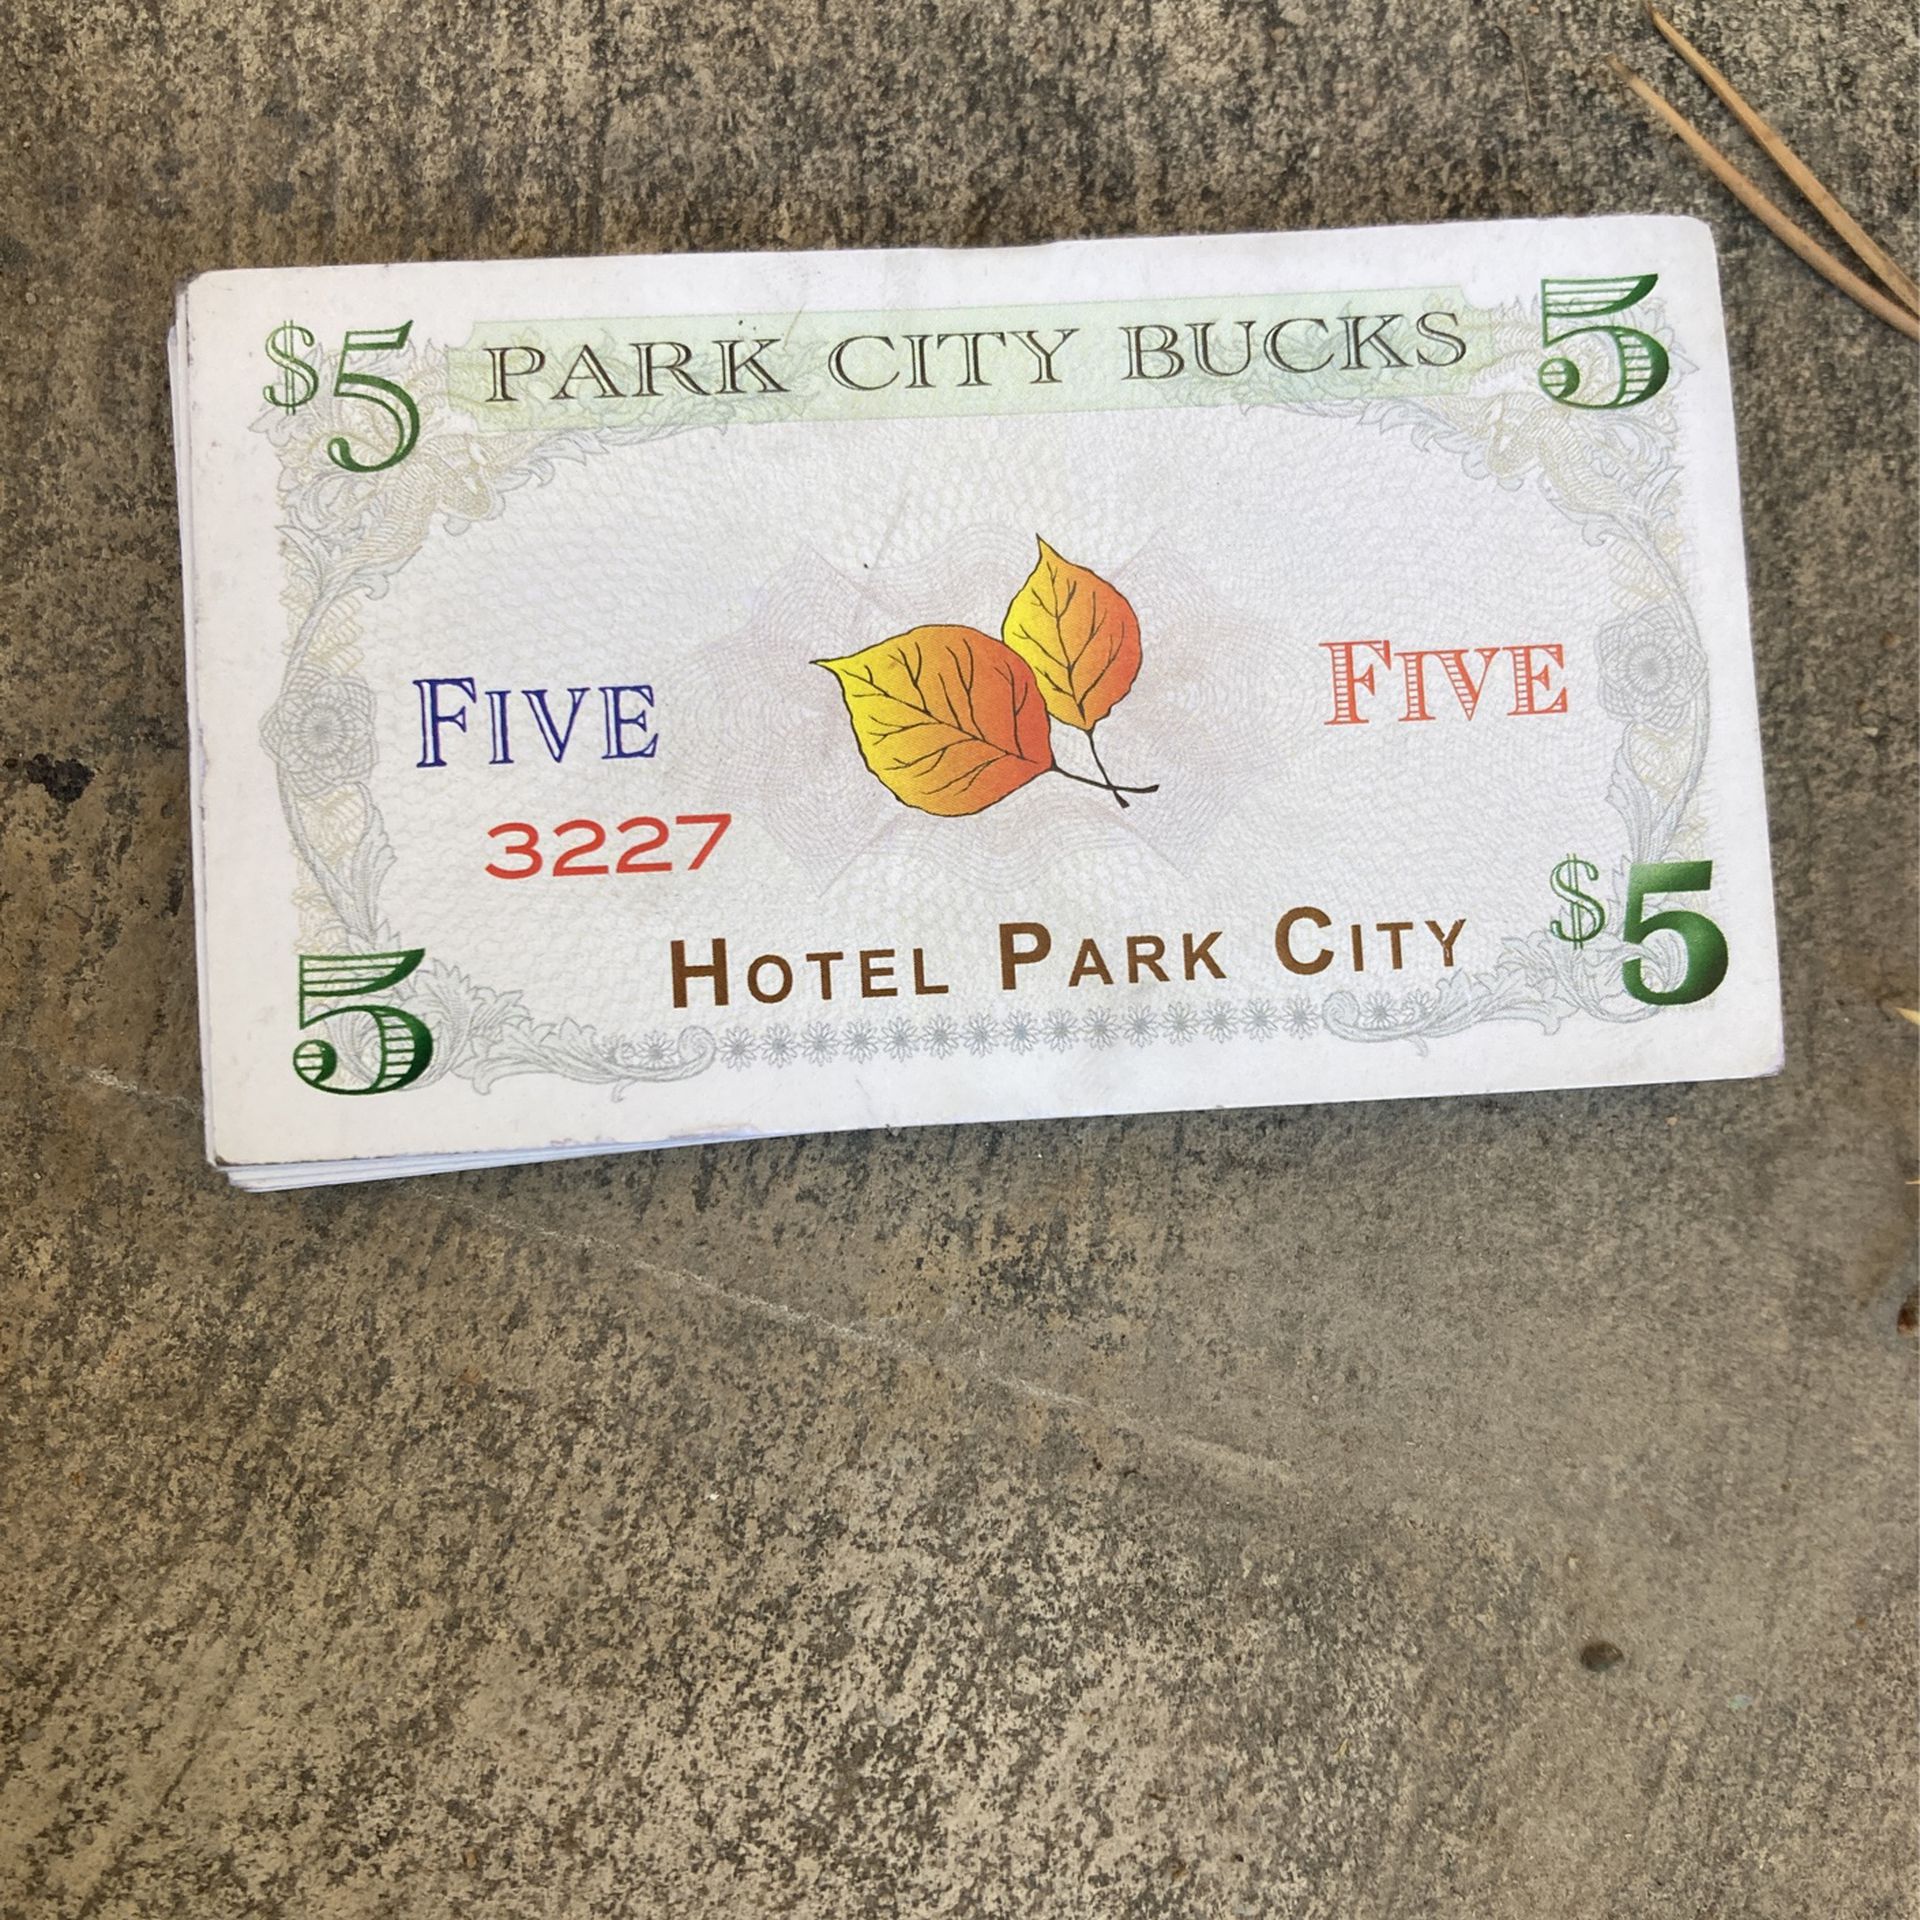 Park City Bucks